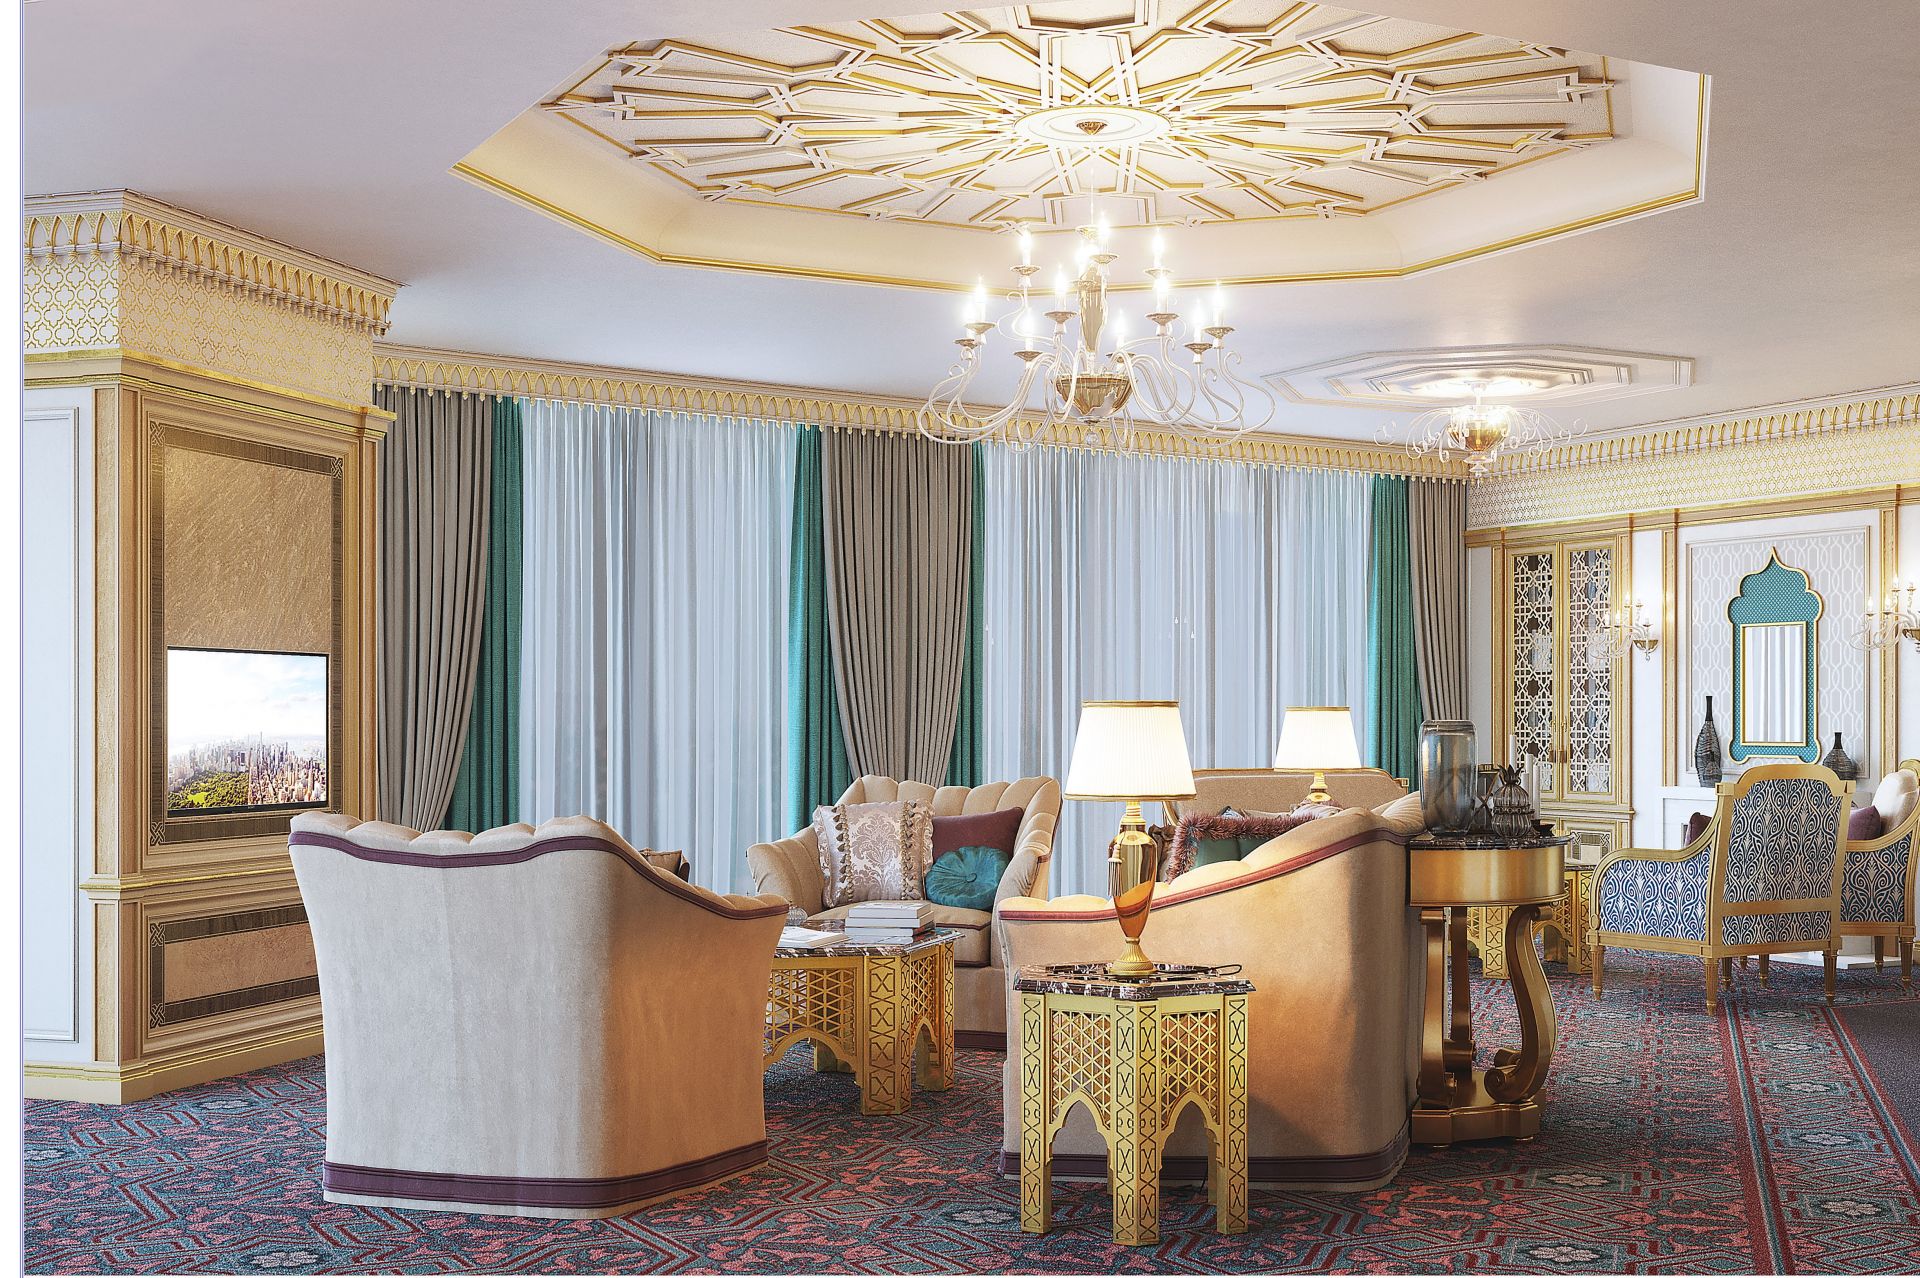 Design, Presidential suite in Arabian style, Hilton